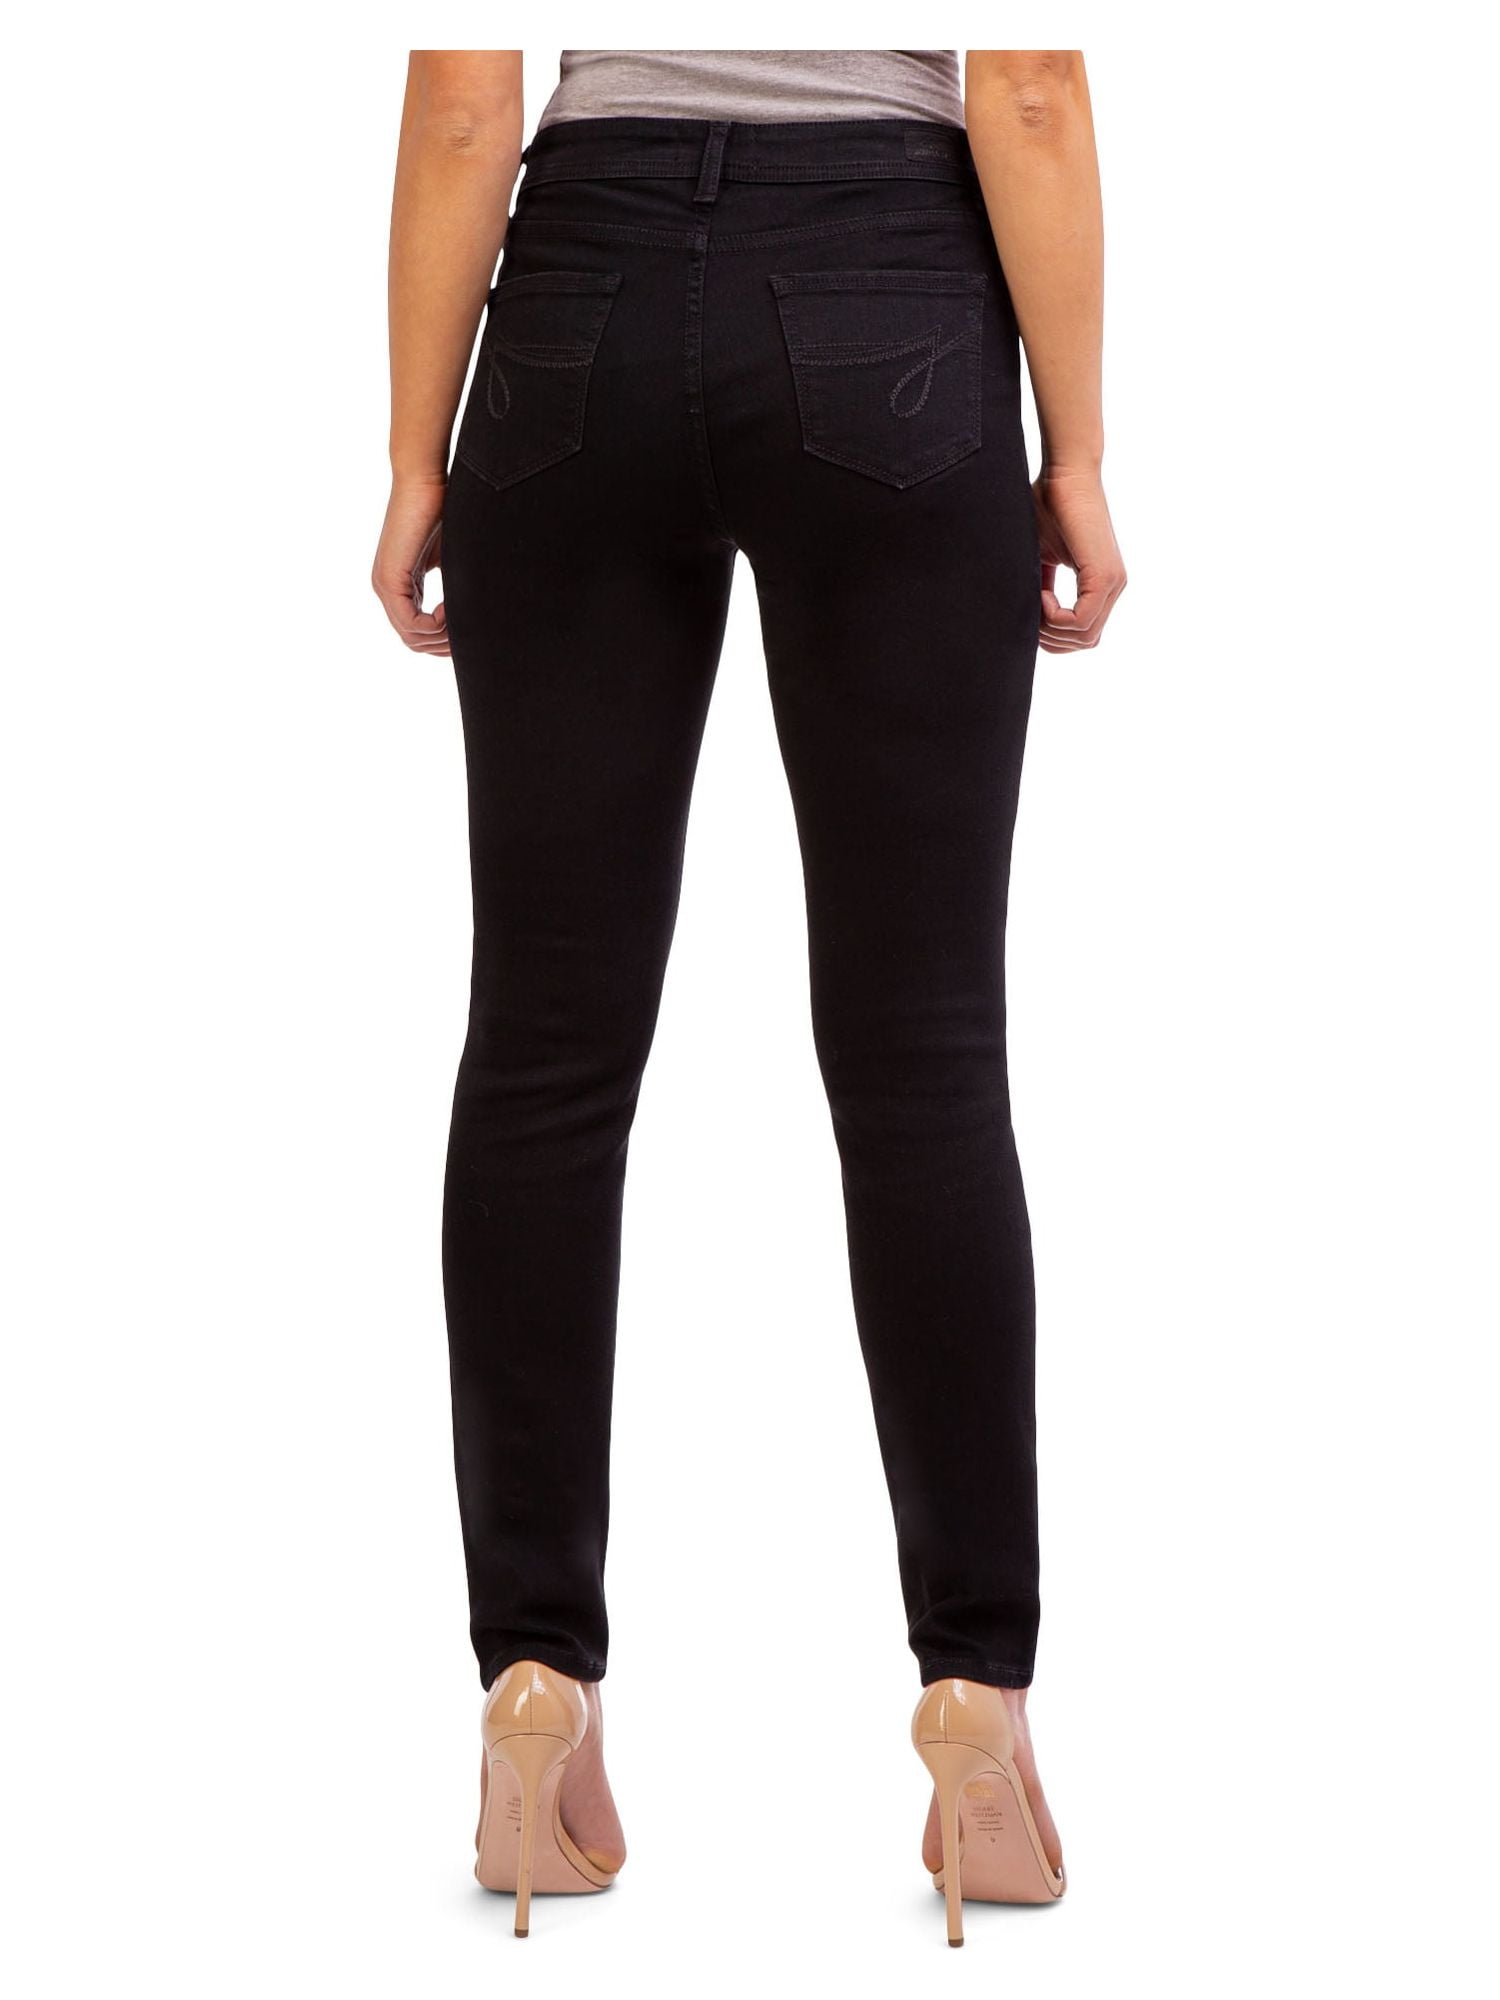 Jordache Women's Mid Rise Skinny Jeans, Regular and Short Inseams 